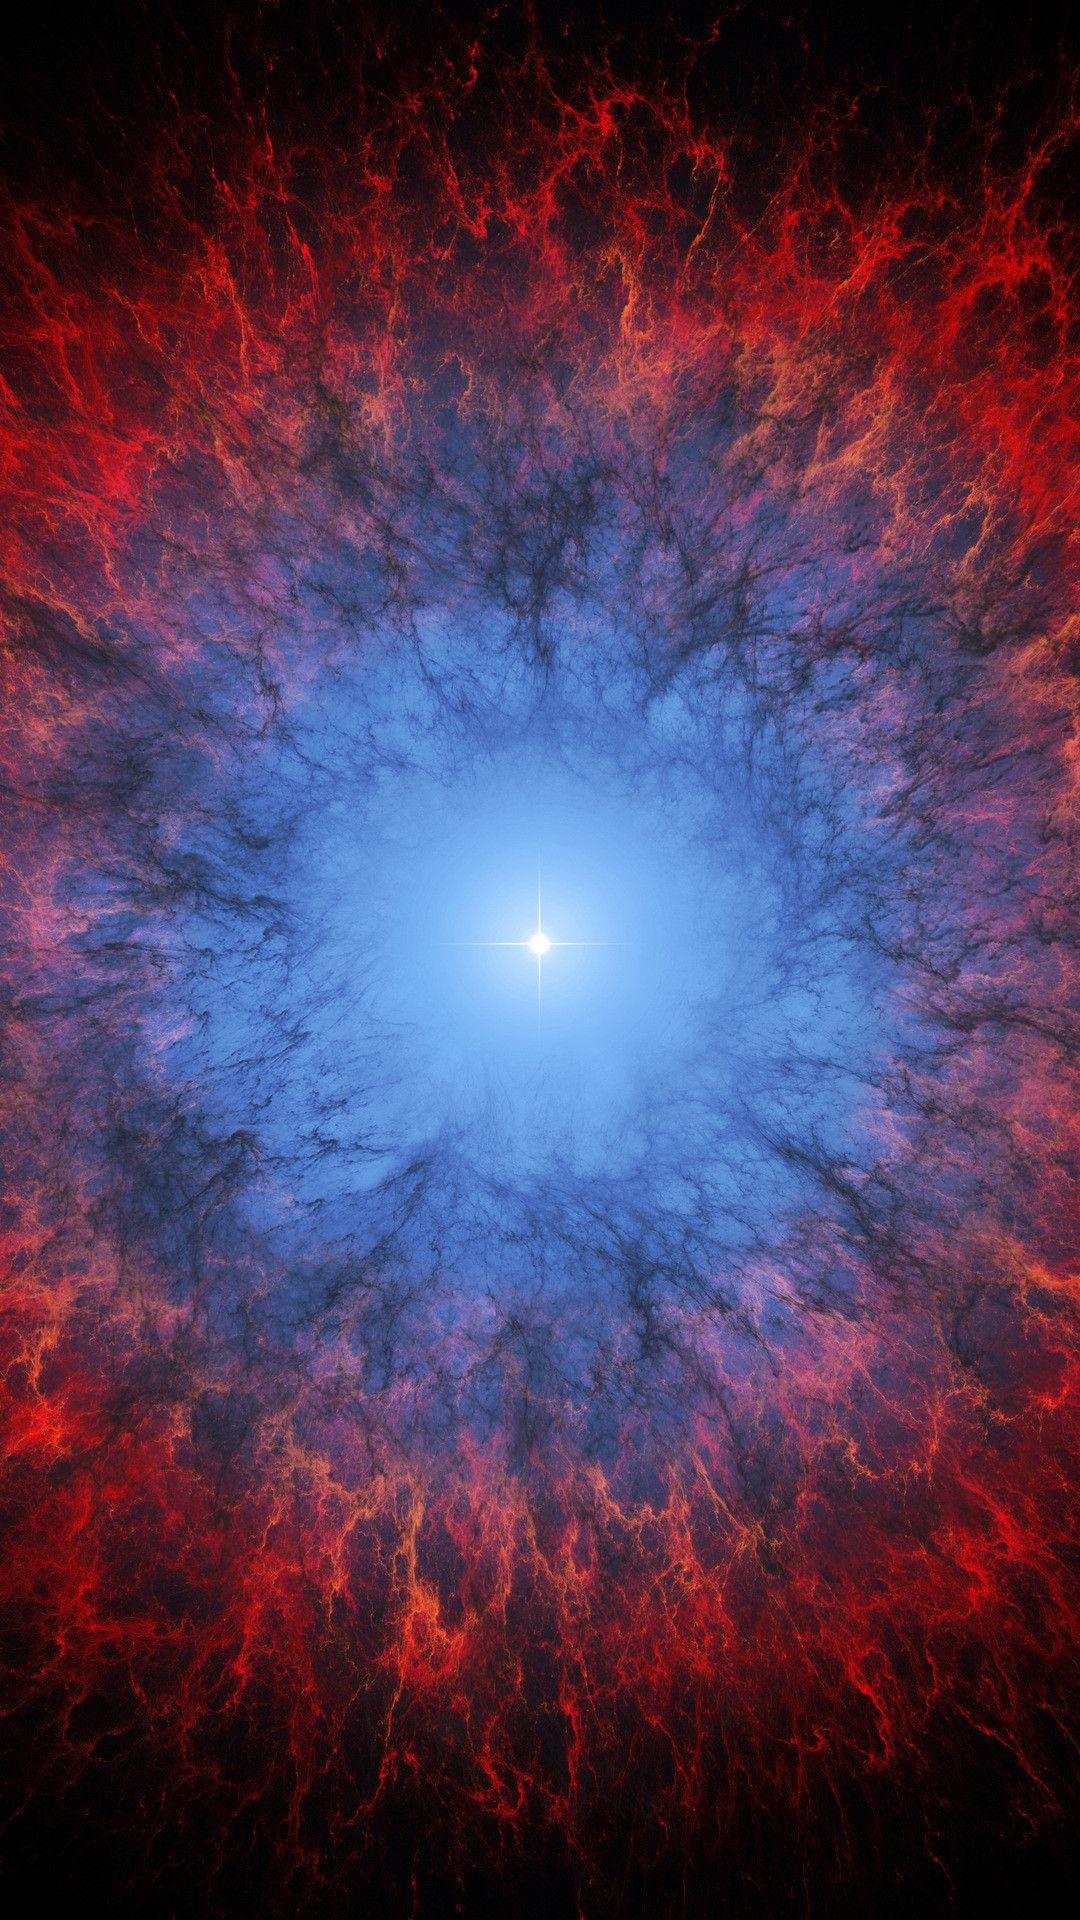 Supernova Wallpaper background picture